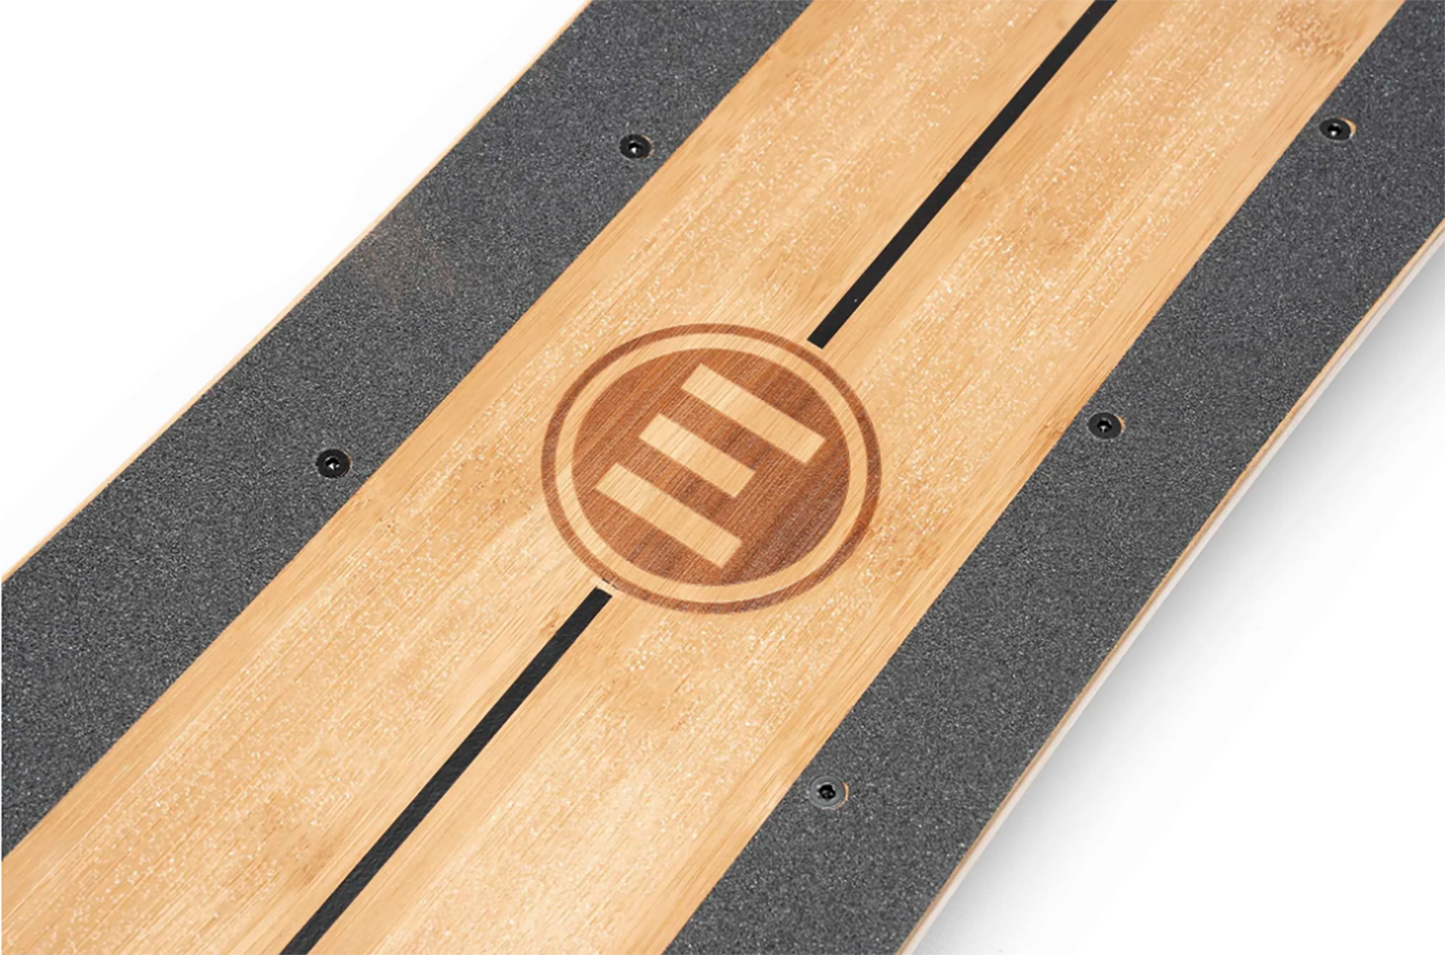 Evolve GTR Bamboo All Terrain Skateboard